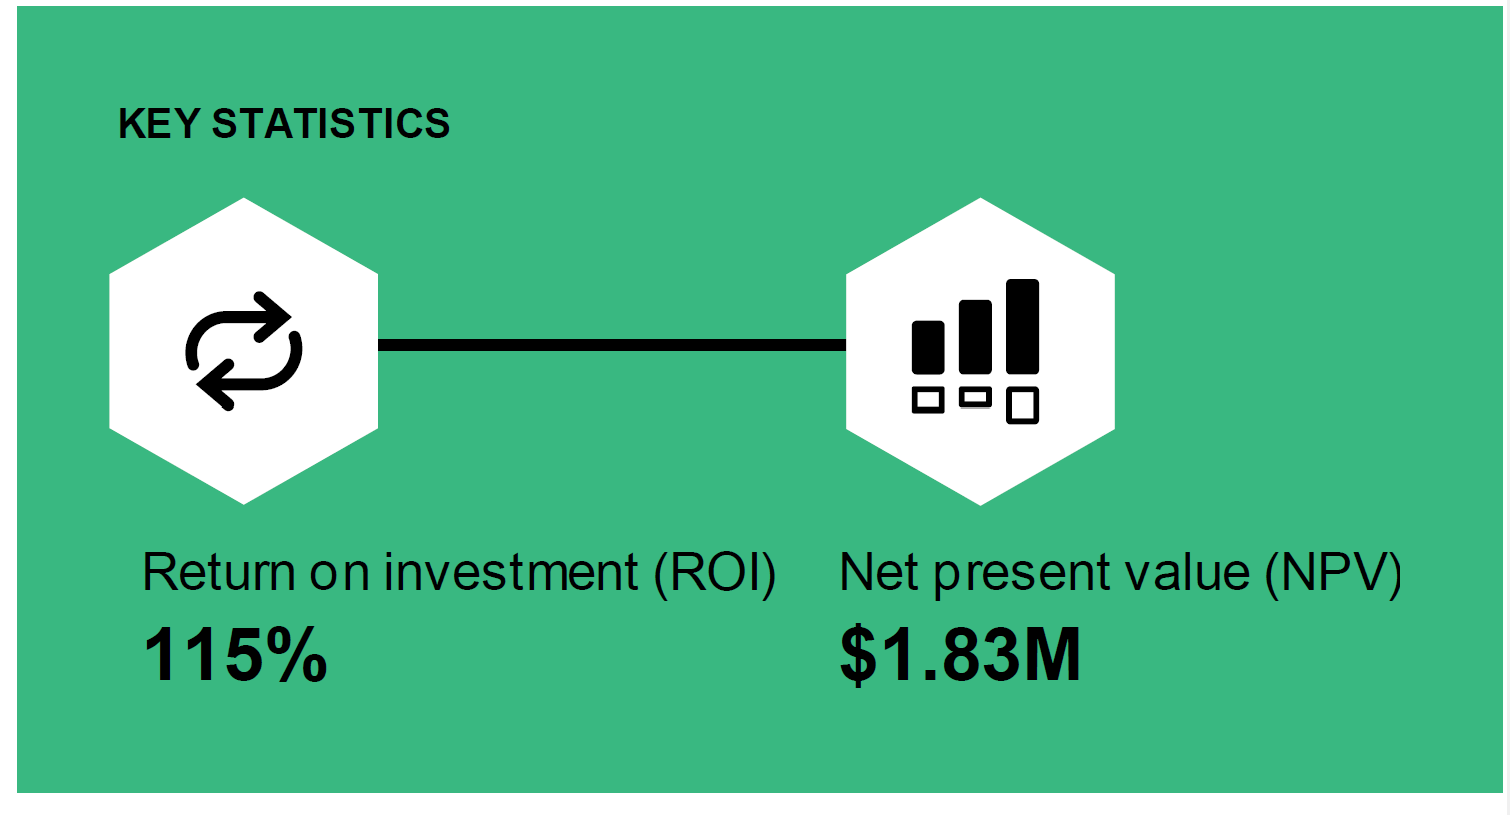 Key statistics showing 115% ROI and $1.83M NPV